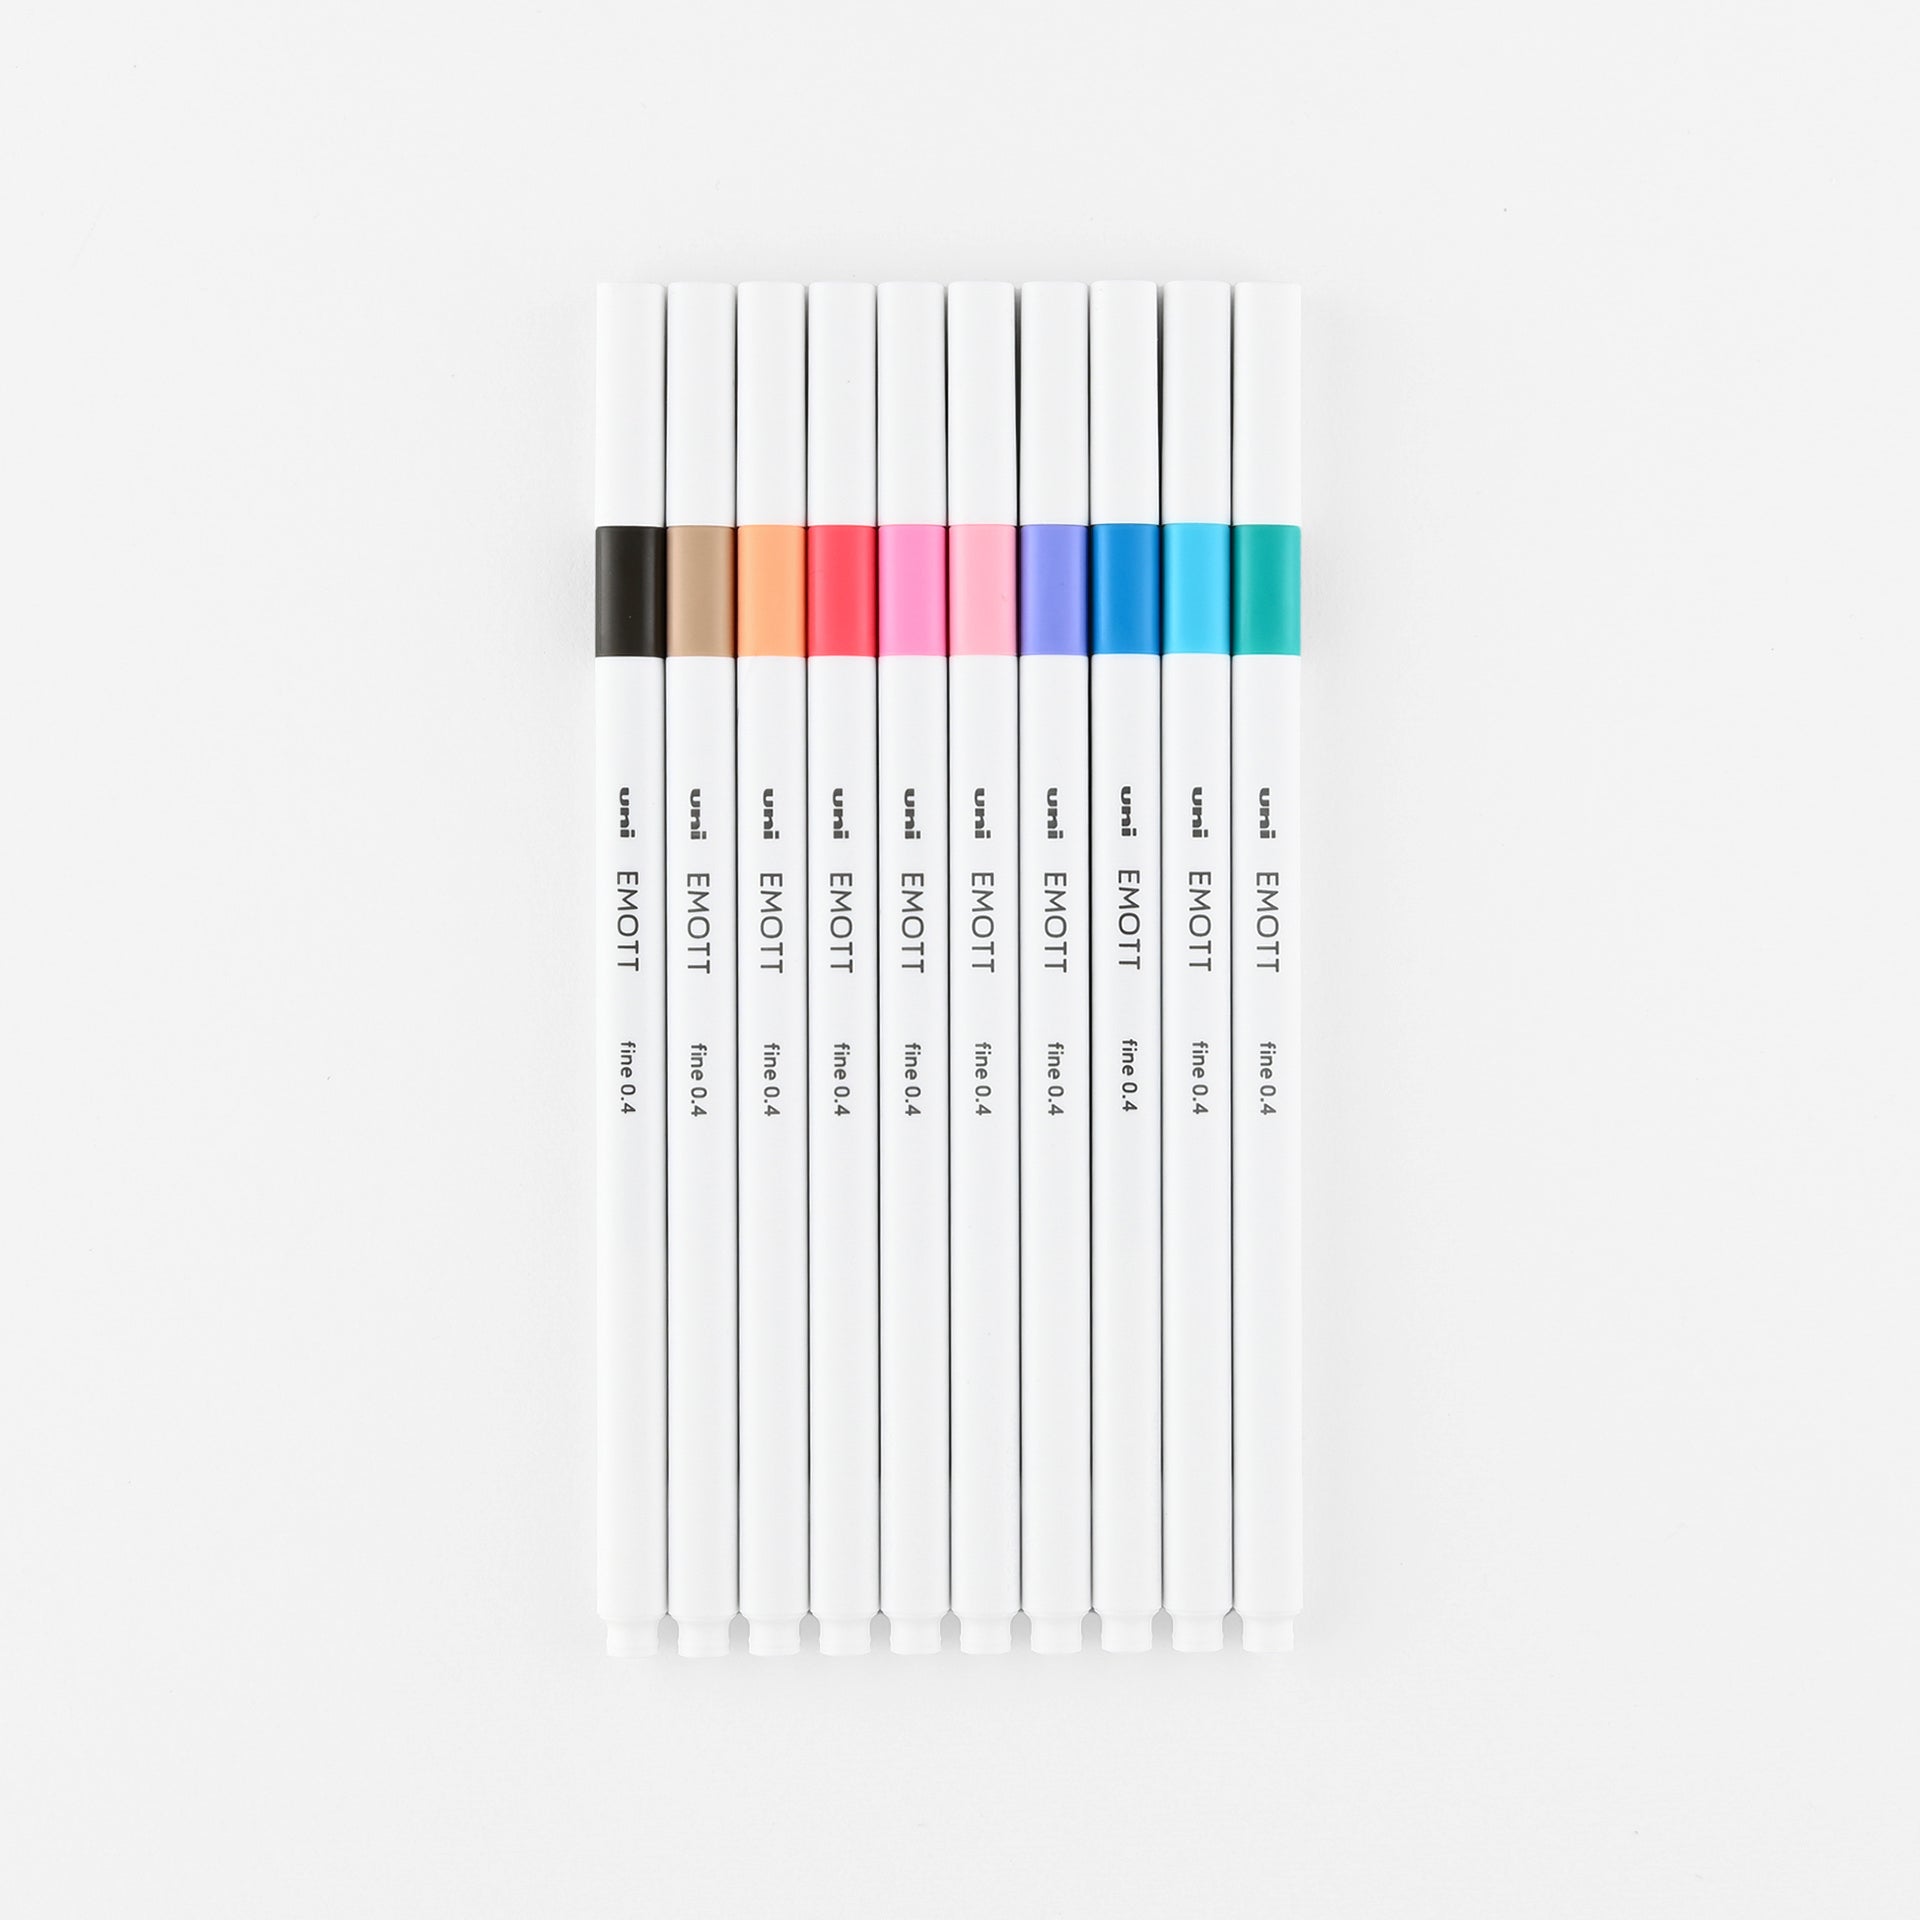 emott Fineliner Pen Set #8, 5-Colors, Retro